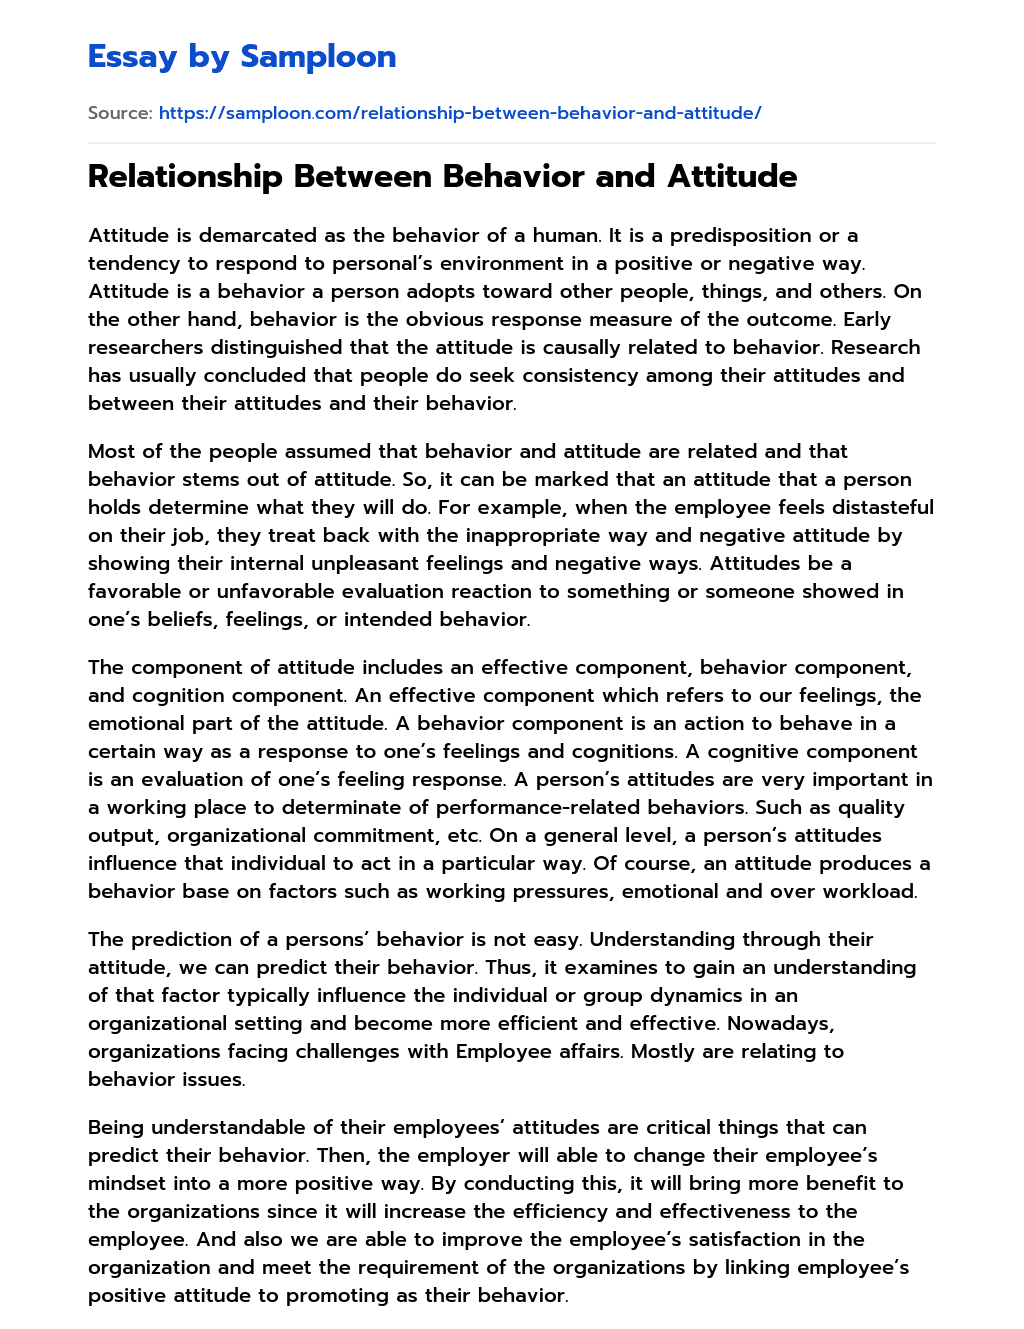 Relationship Between Behavior and Attitude essay